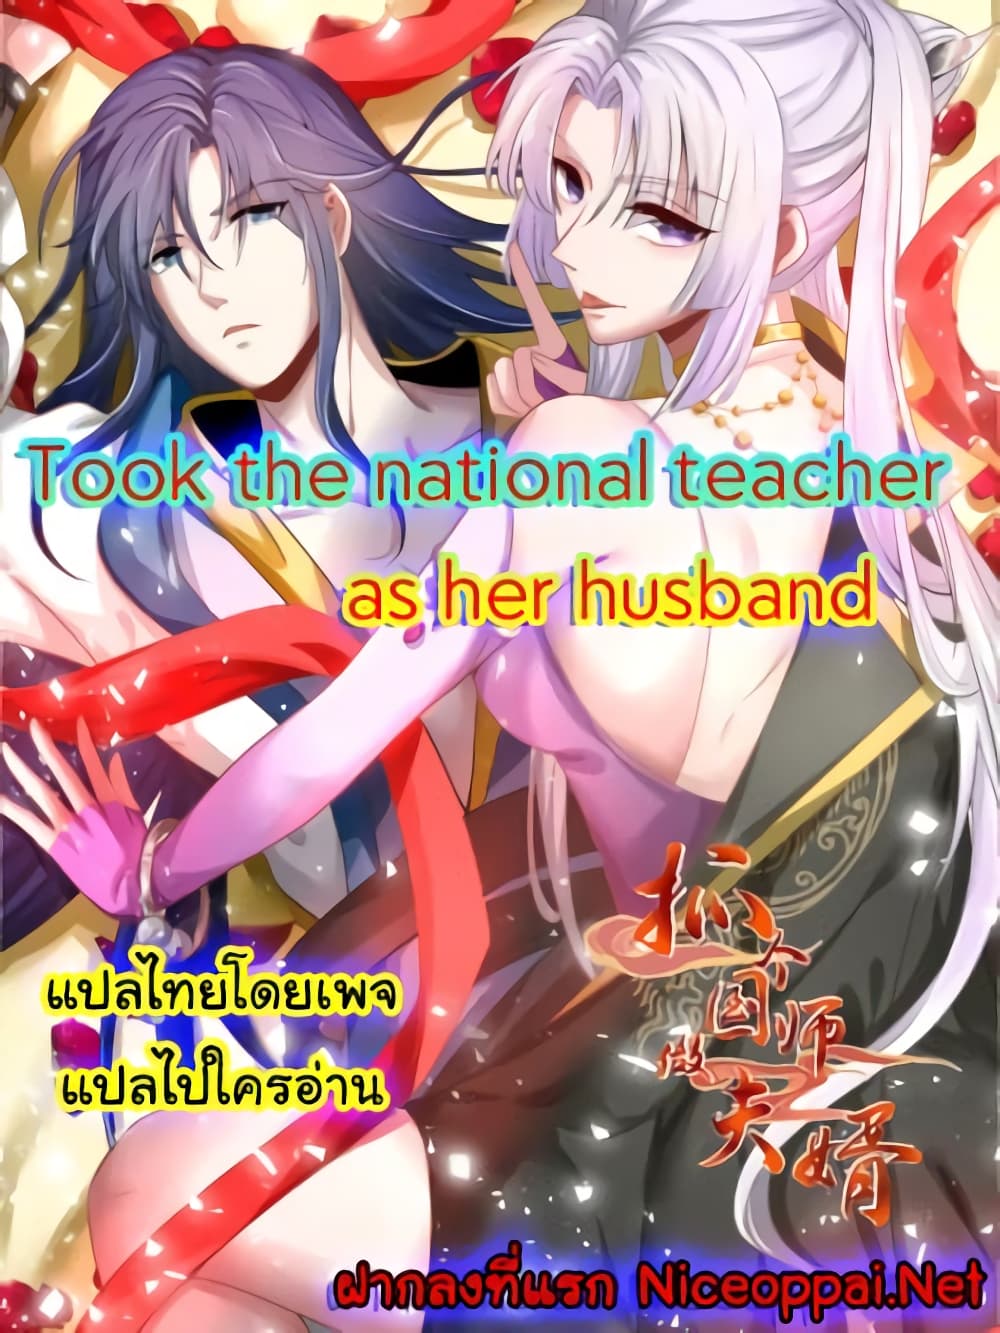 Took the National Teacher as Her Husband 22 (1)